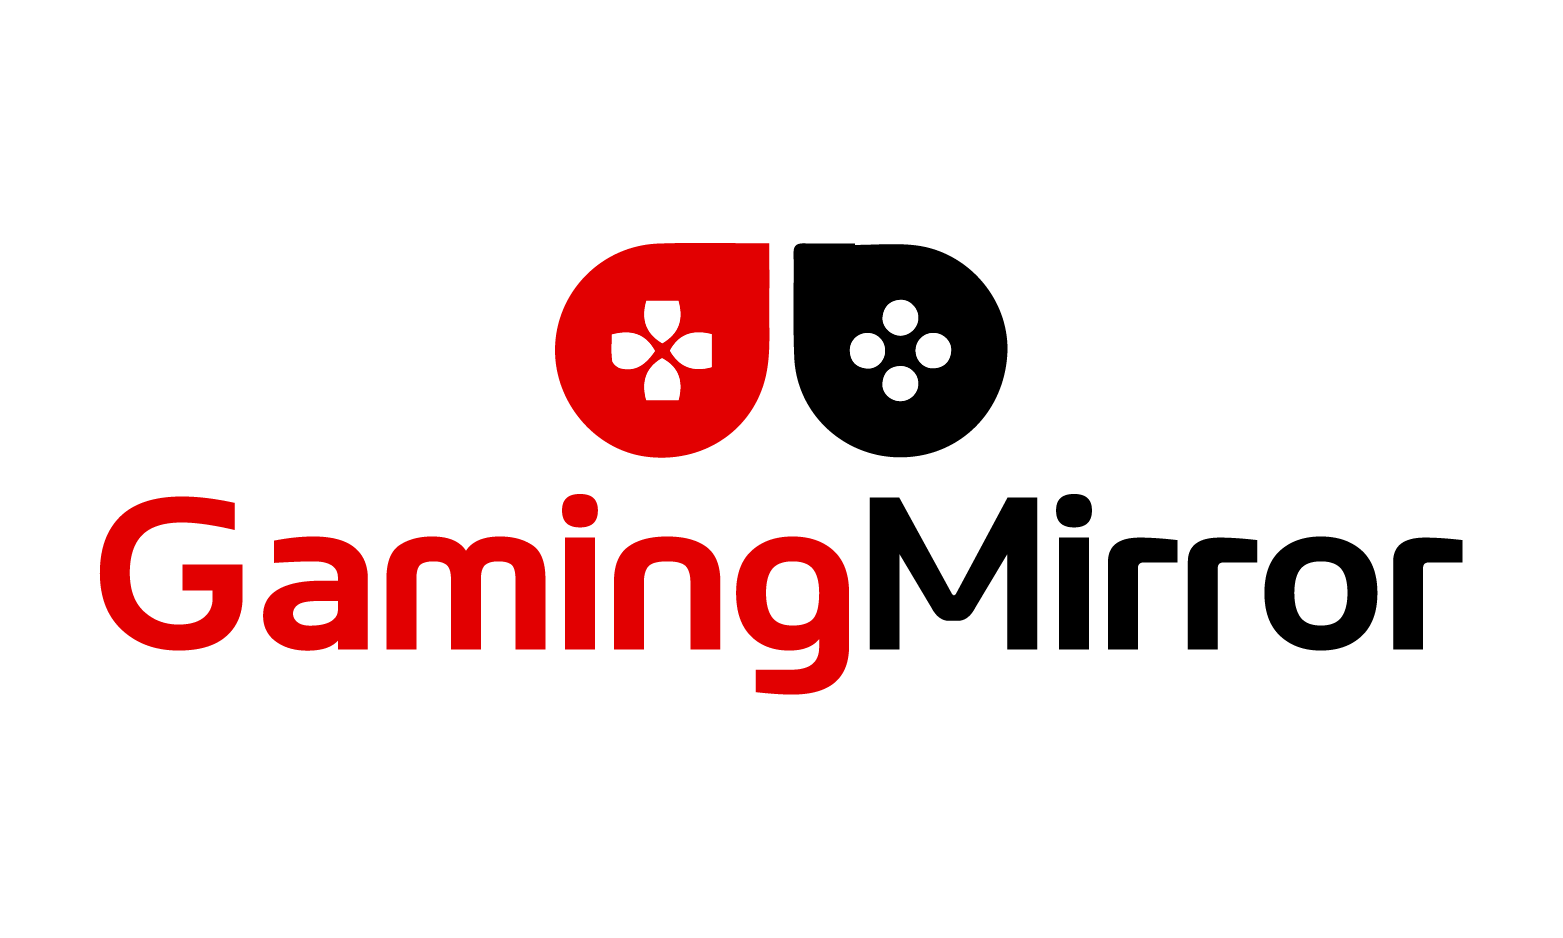 GamingMirror.com - Creative brandable domain for sale